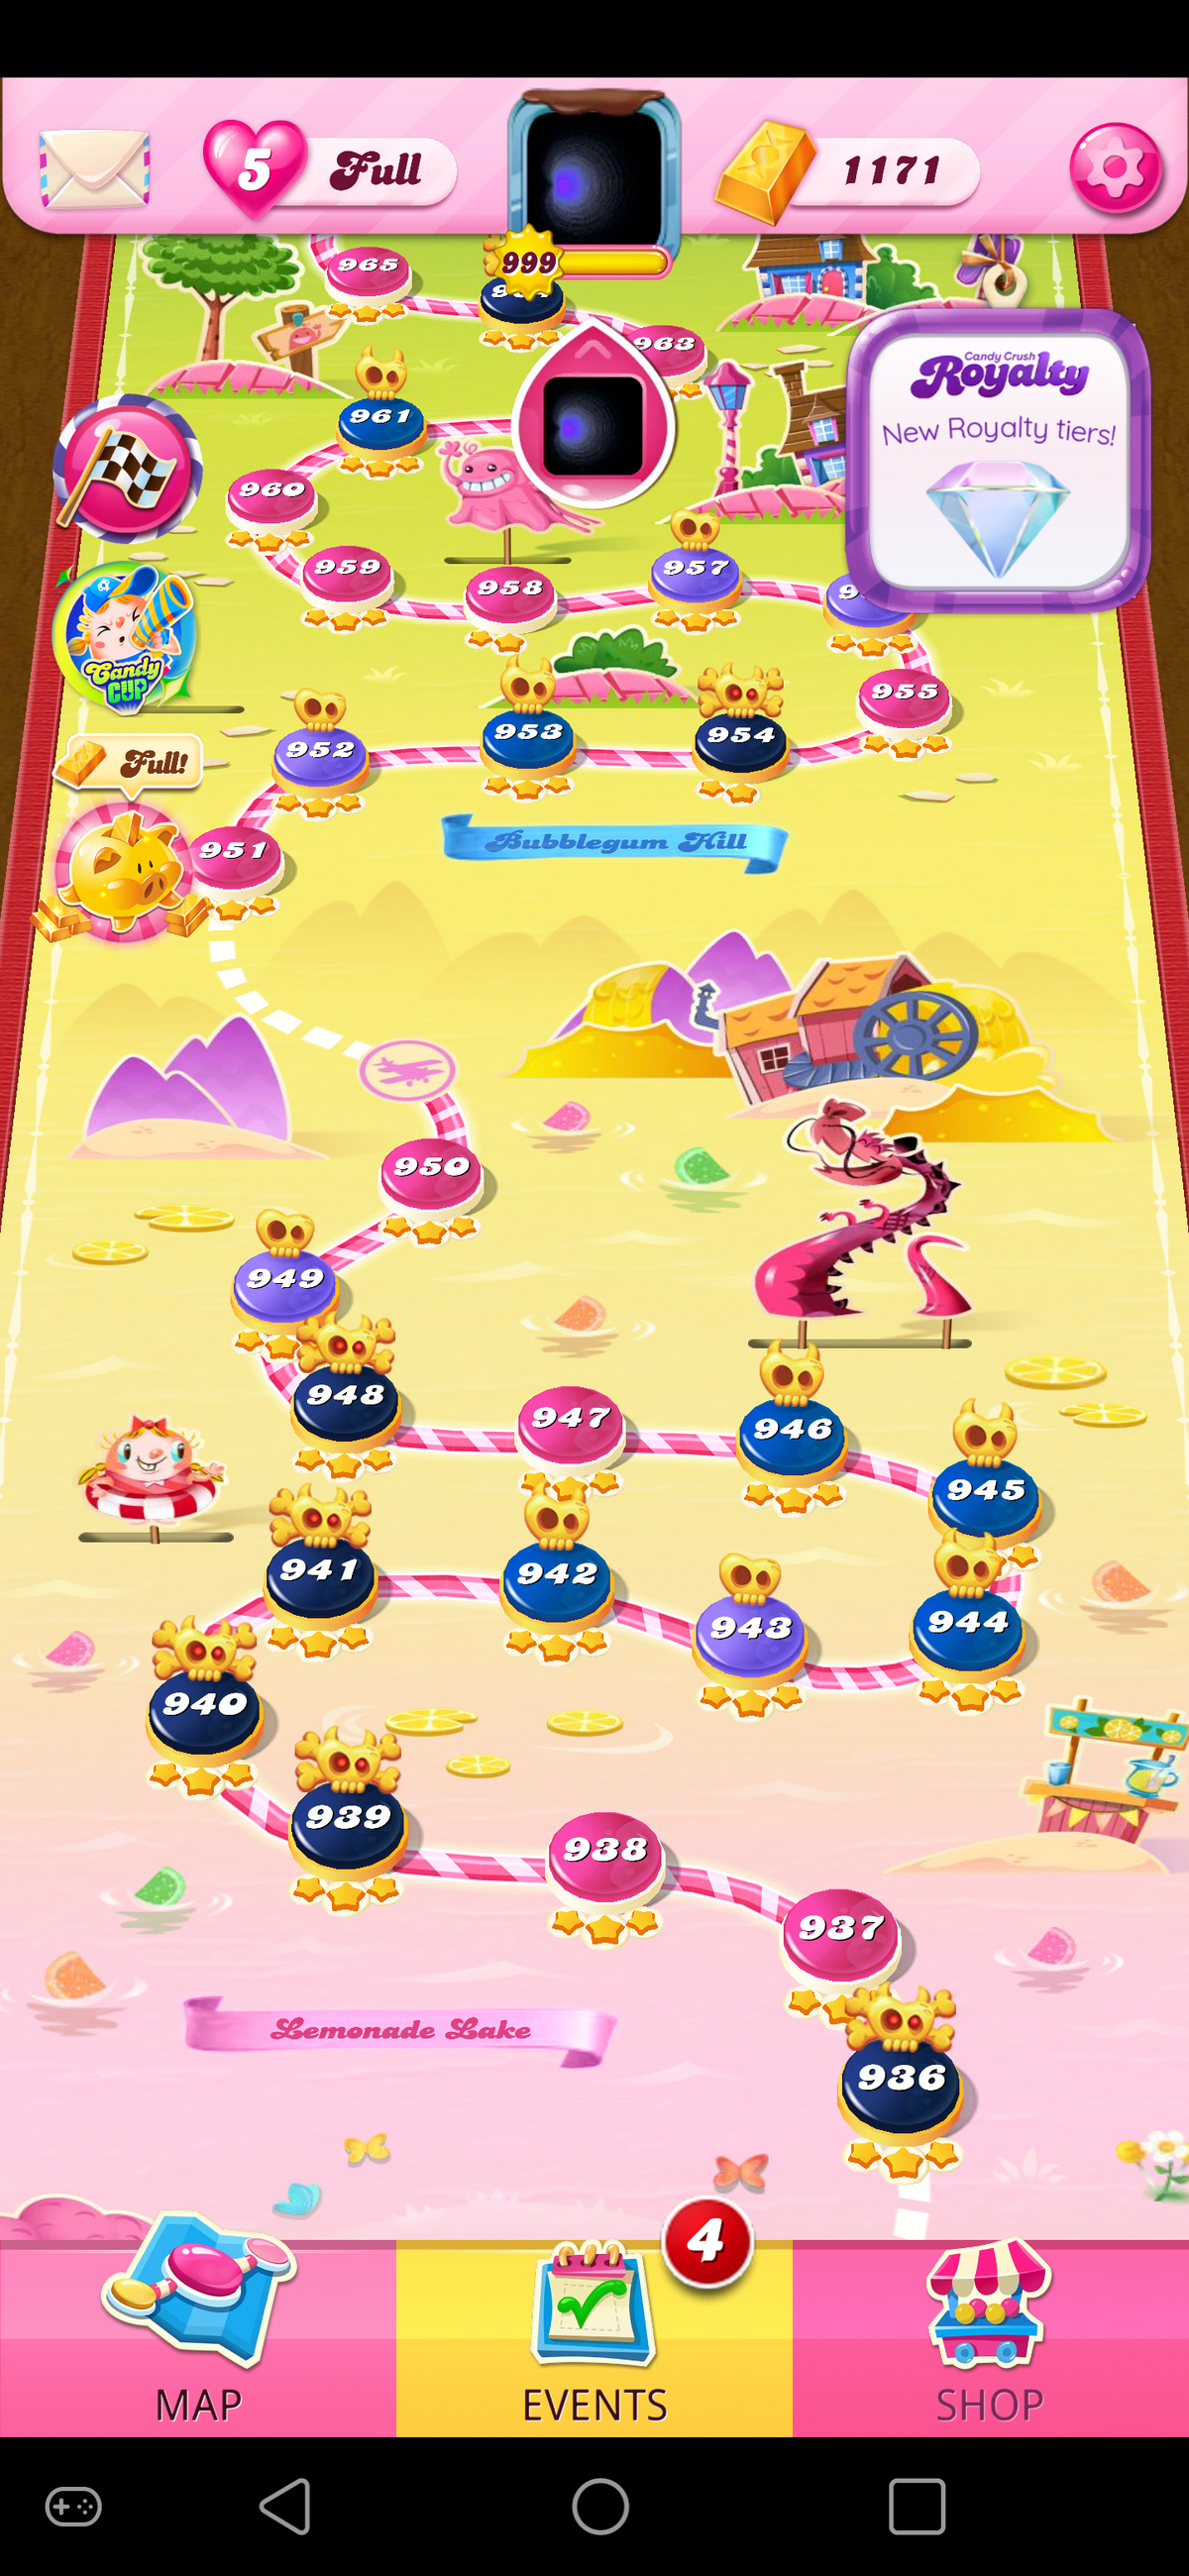 Special Candy, Candy Crush Saga Wiki